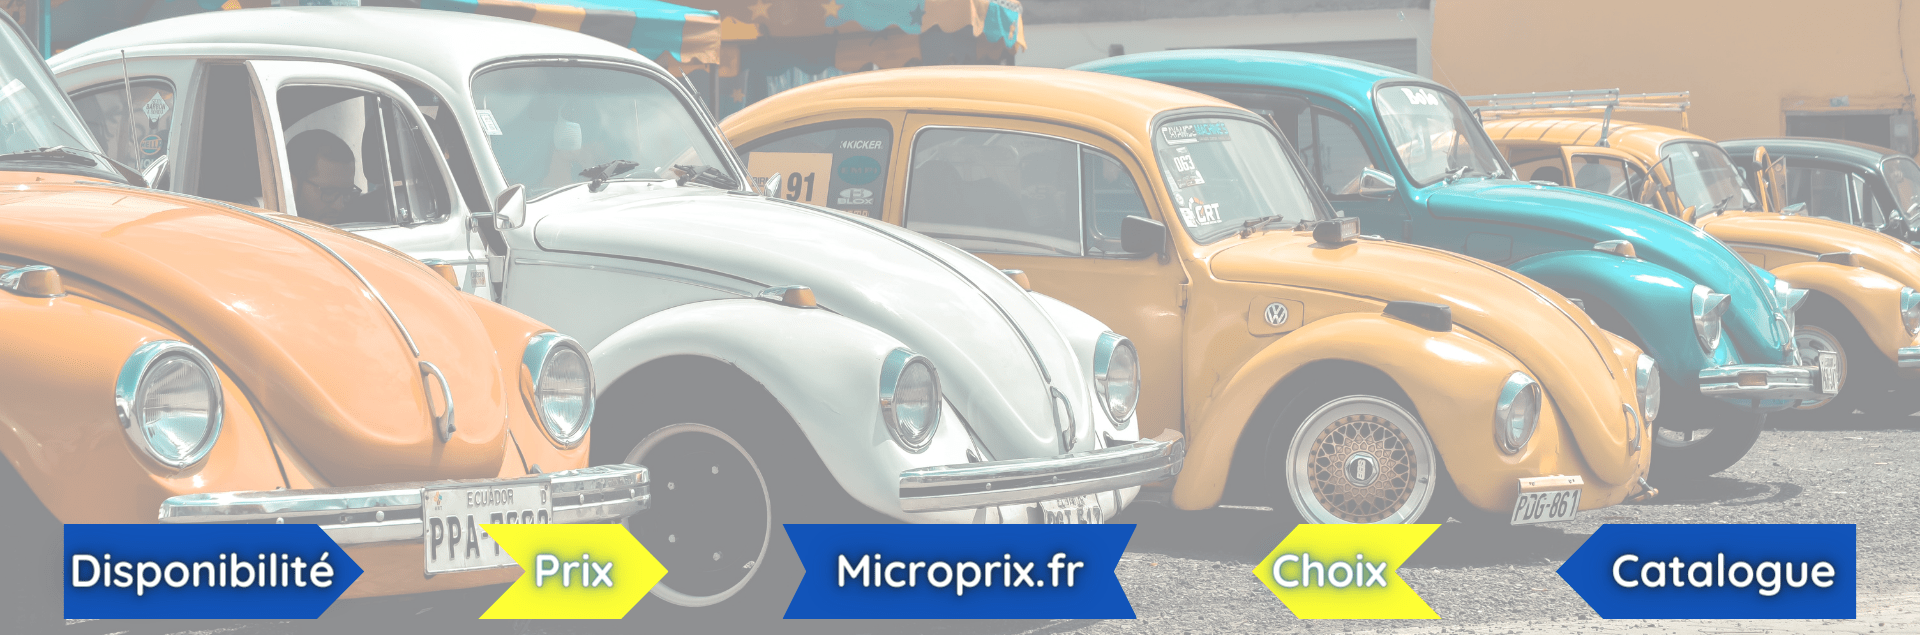 Large choix | Microprix.fr | Cocx Combi Transporter Golf